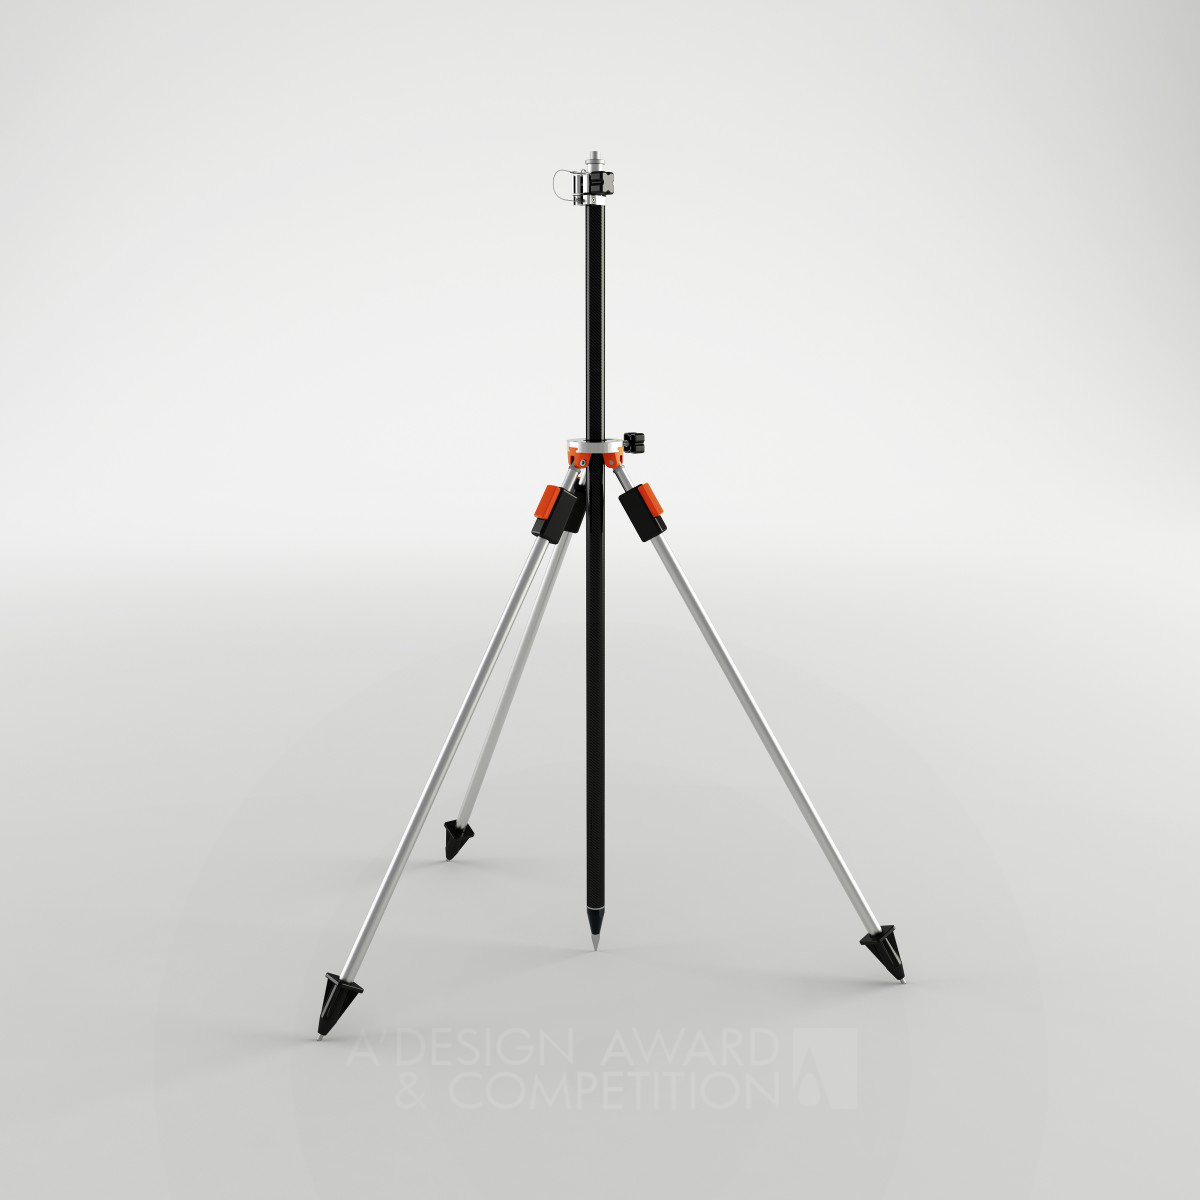 Sistem Range Pole and Tripod by Hakan Gürsu Silver Product Engineering and Technical Design Award Winner 2015 